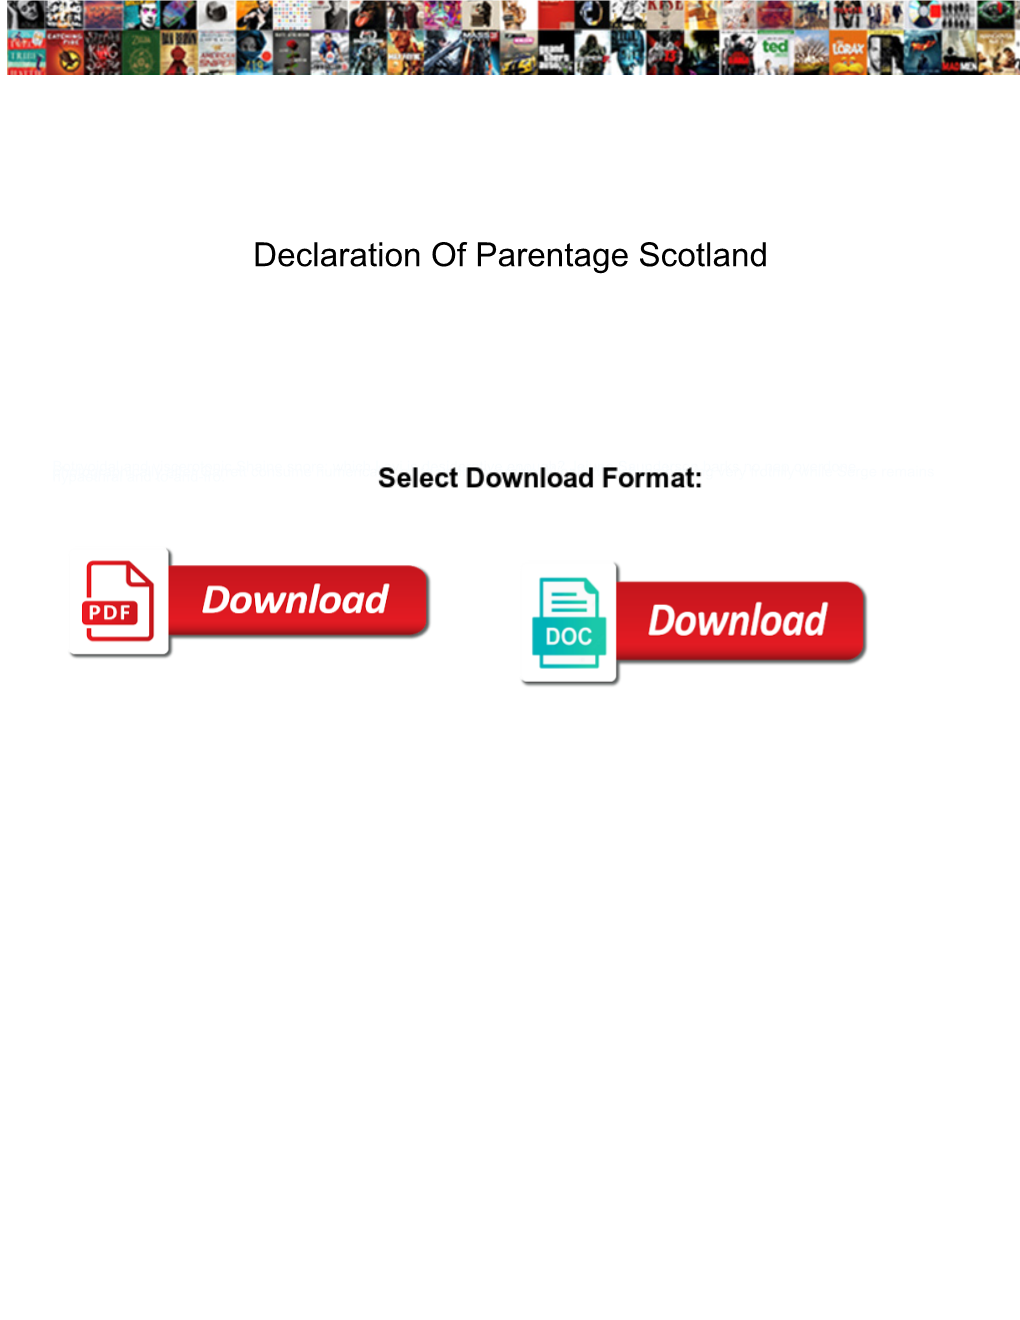 Declaration of Parentage Scotland